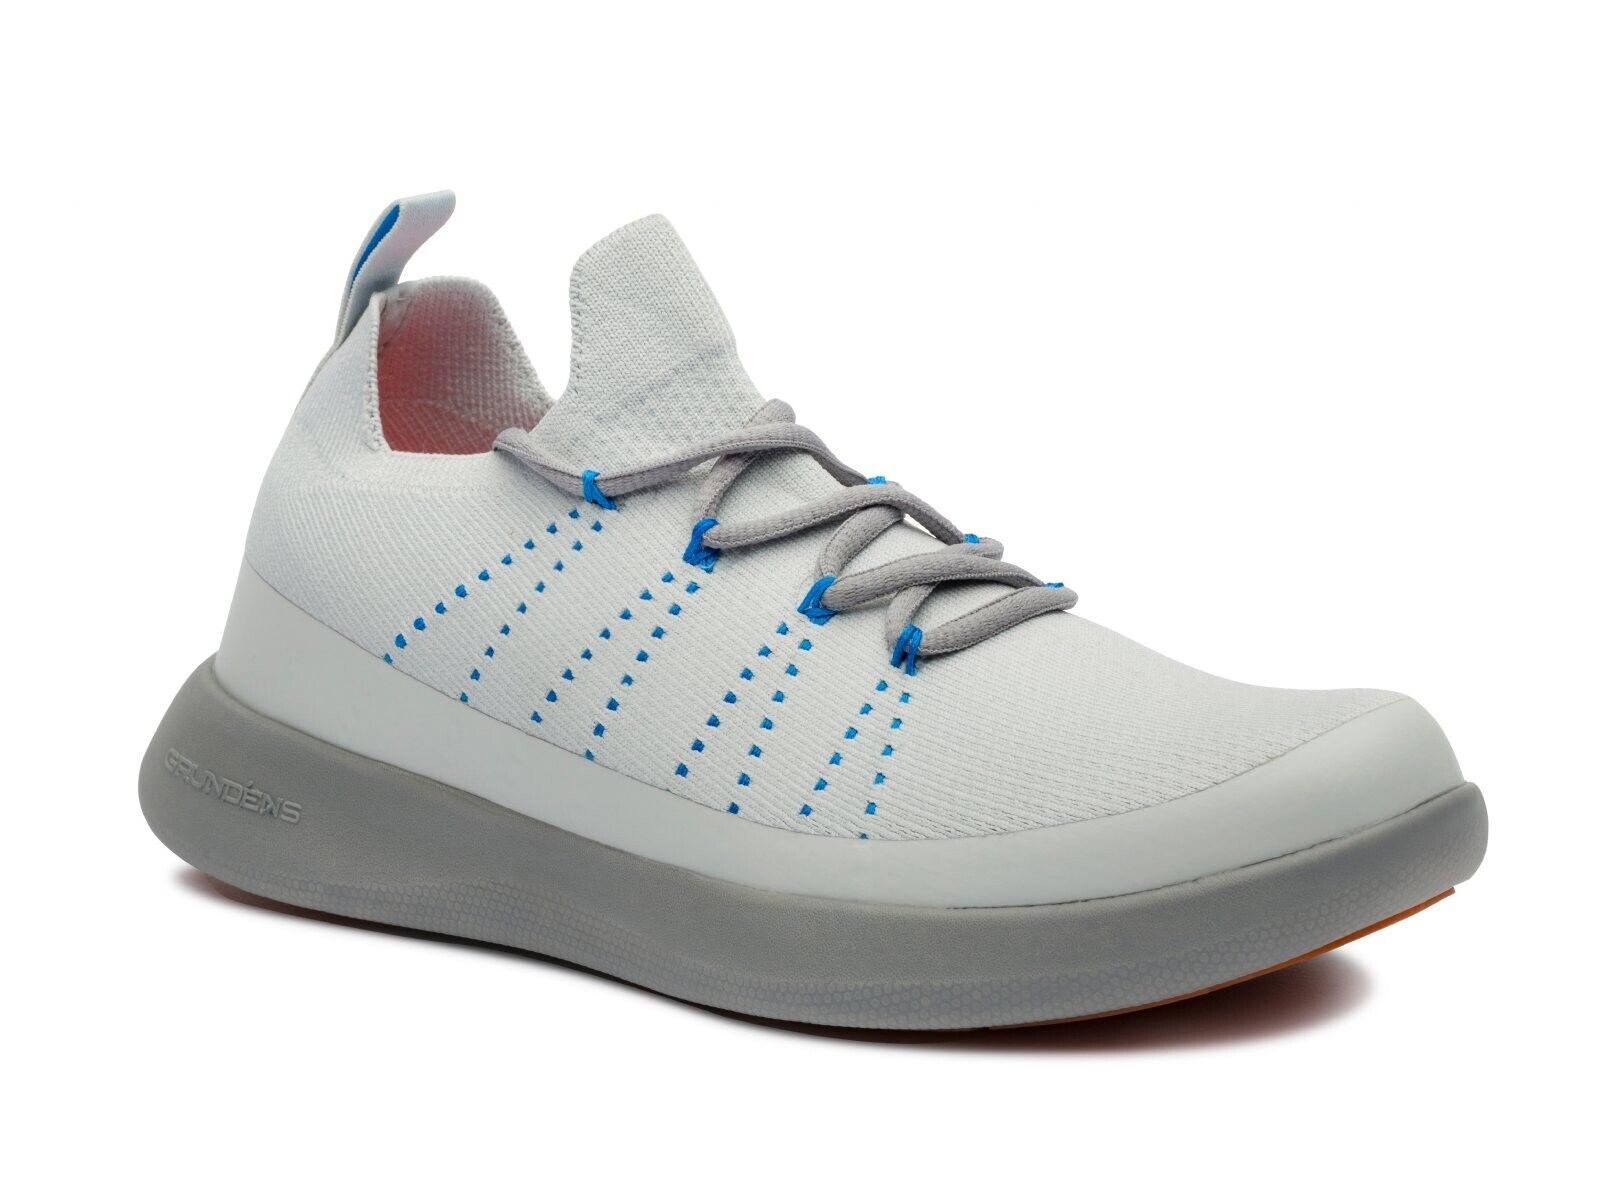 Grundens Men\'s SeaKnit Boat Shoe - Size 10.5 - Color Grey Mist - New